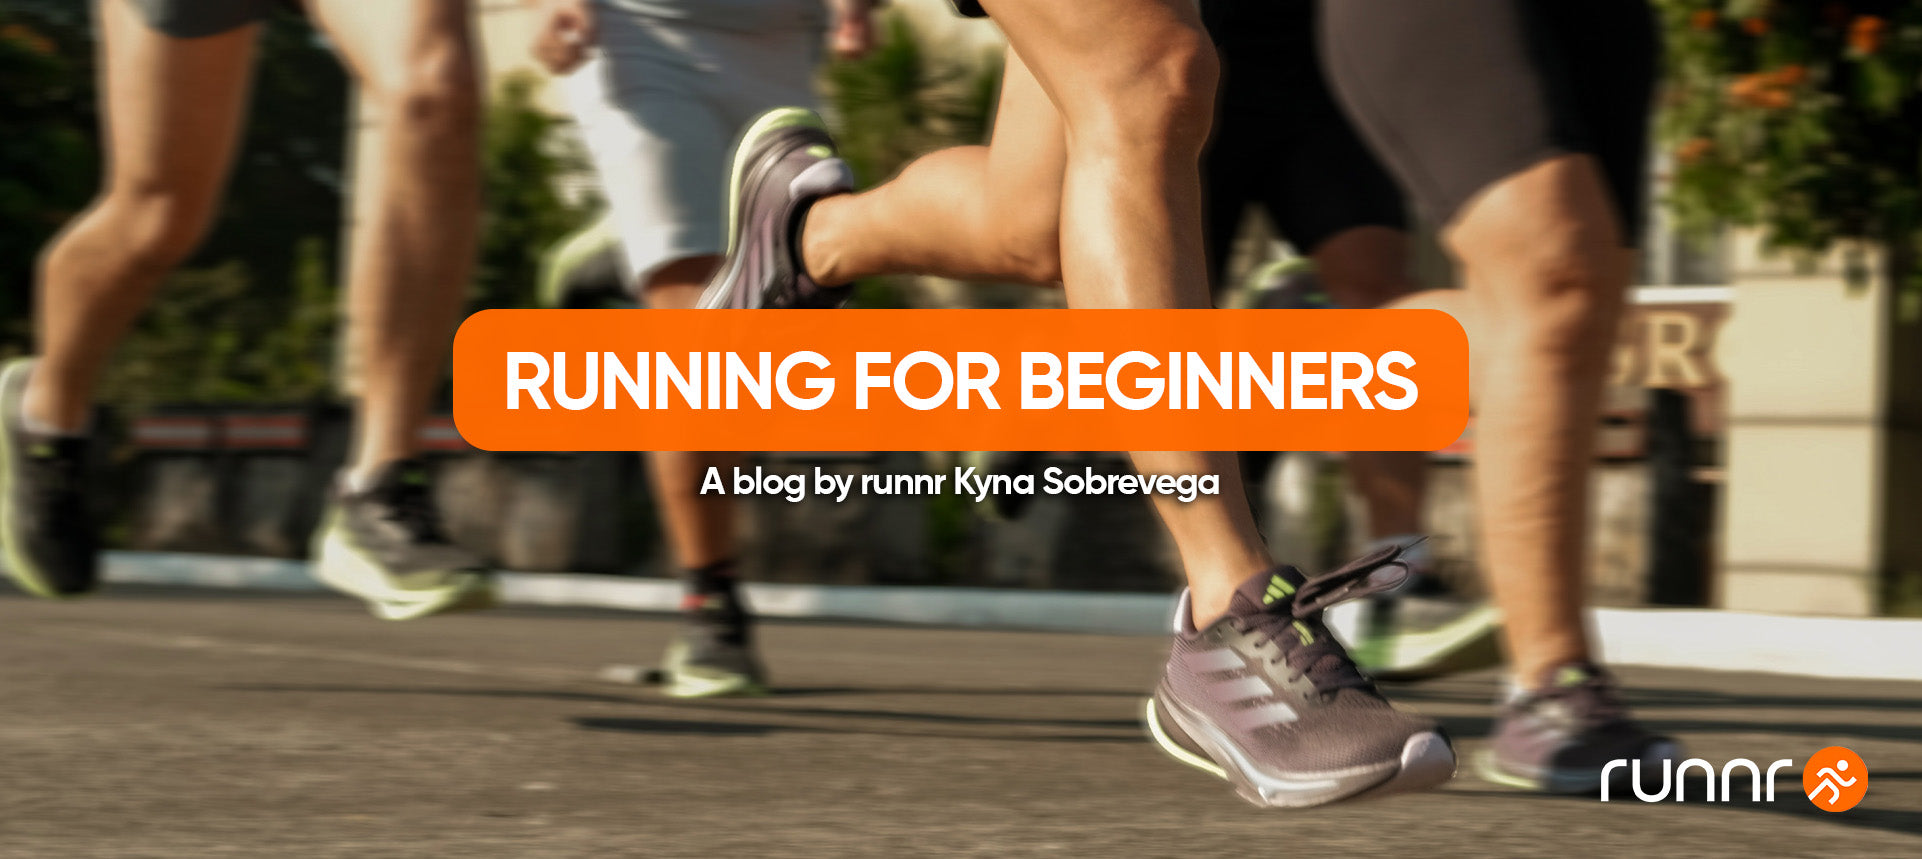 Tips for running everyday : r/runninglifestyle